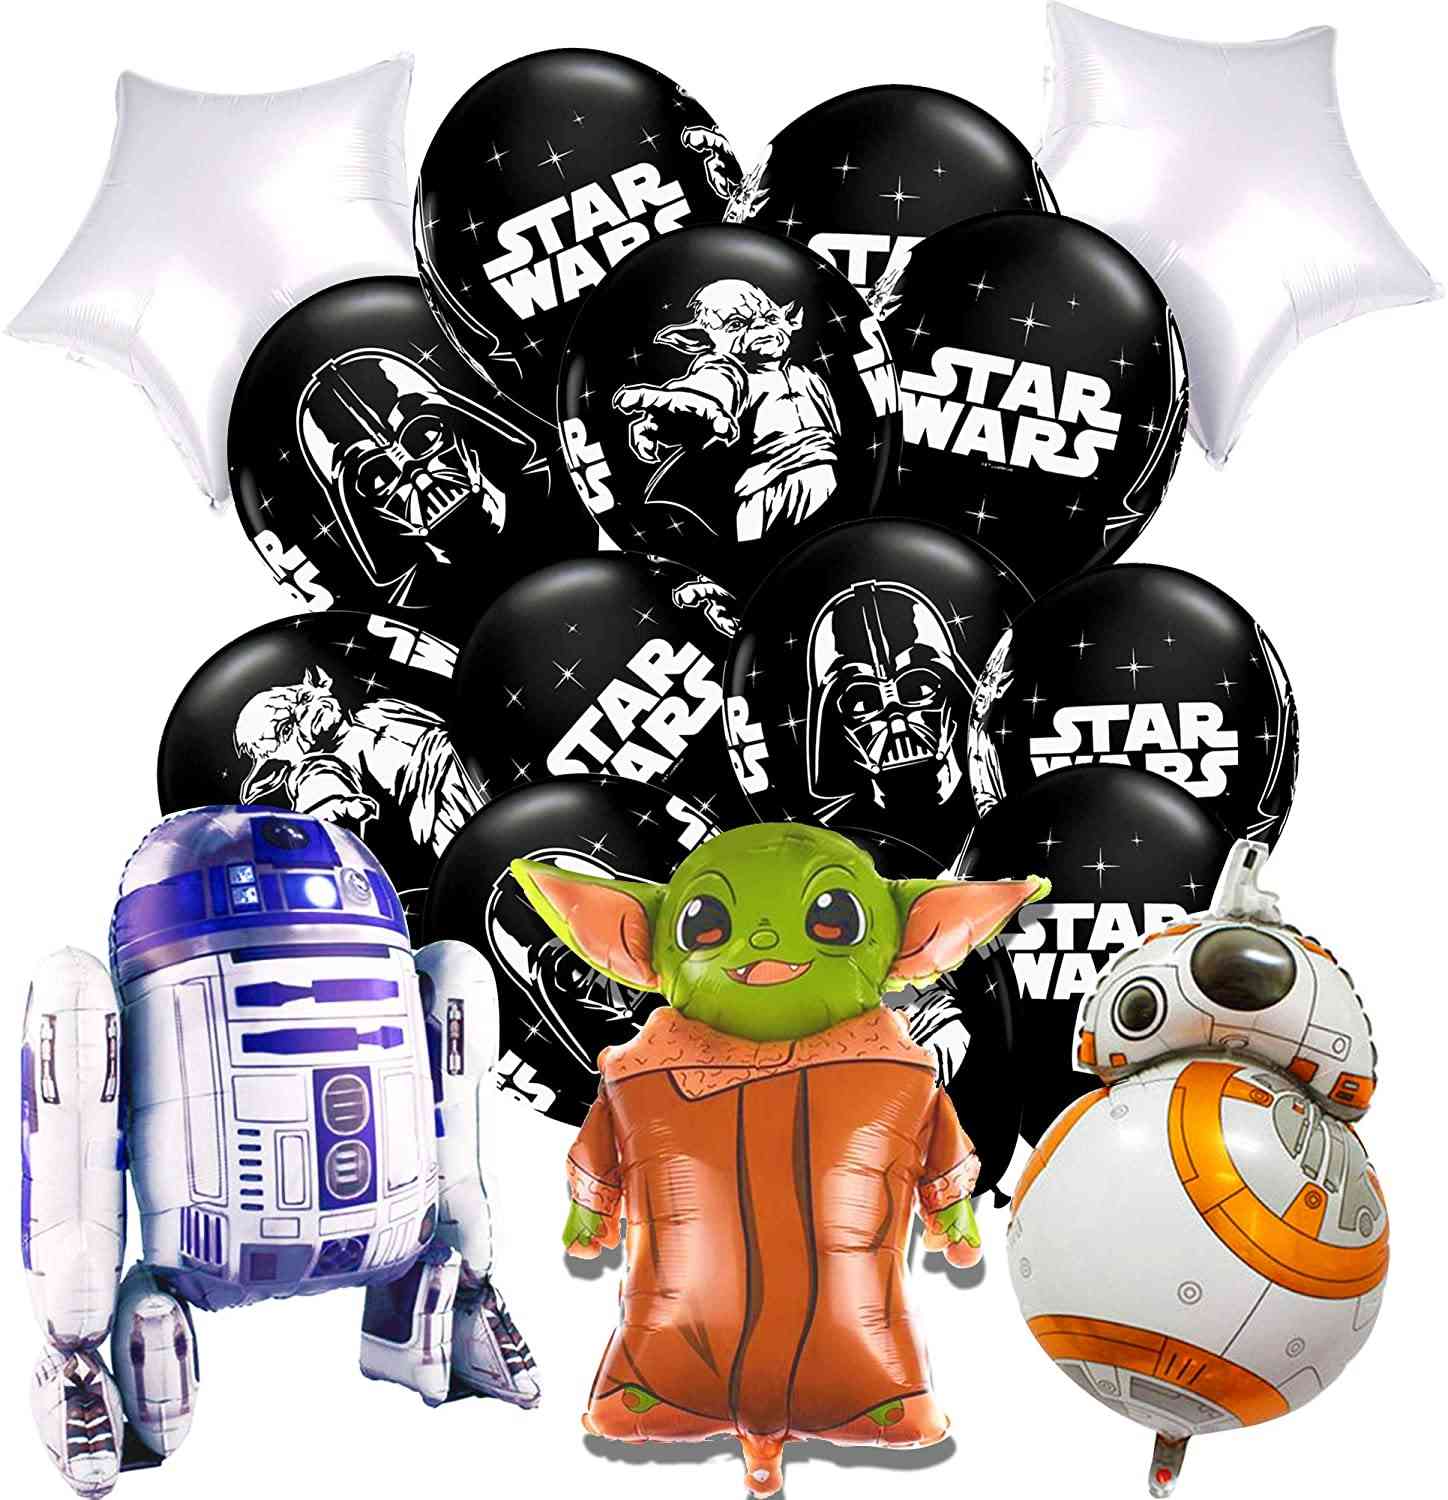 Star Wars Balloon Baby Yoda Bouquet Decoration's Birthday Party Supplies